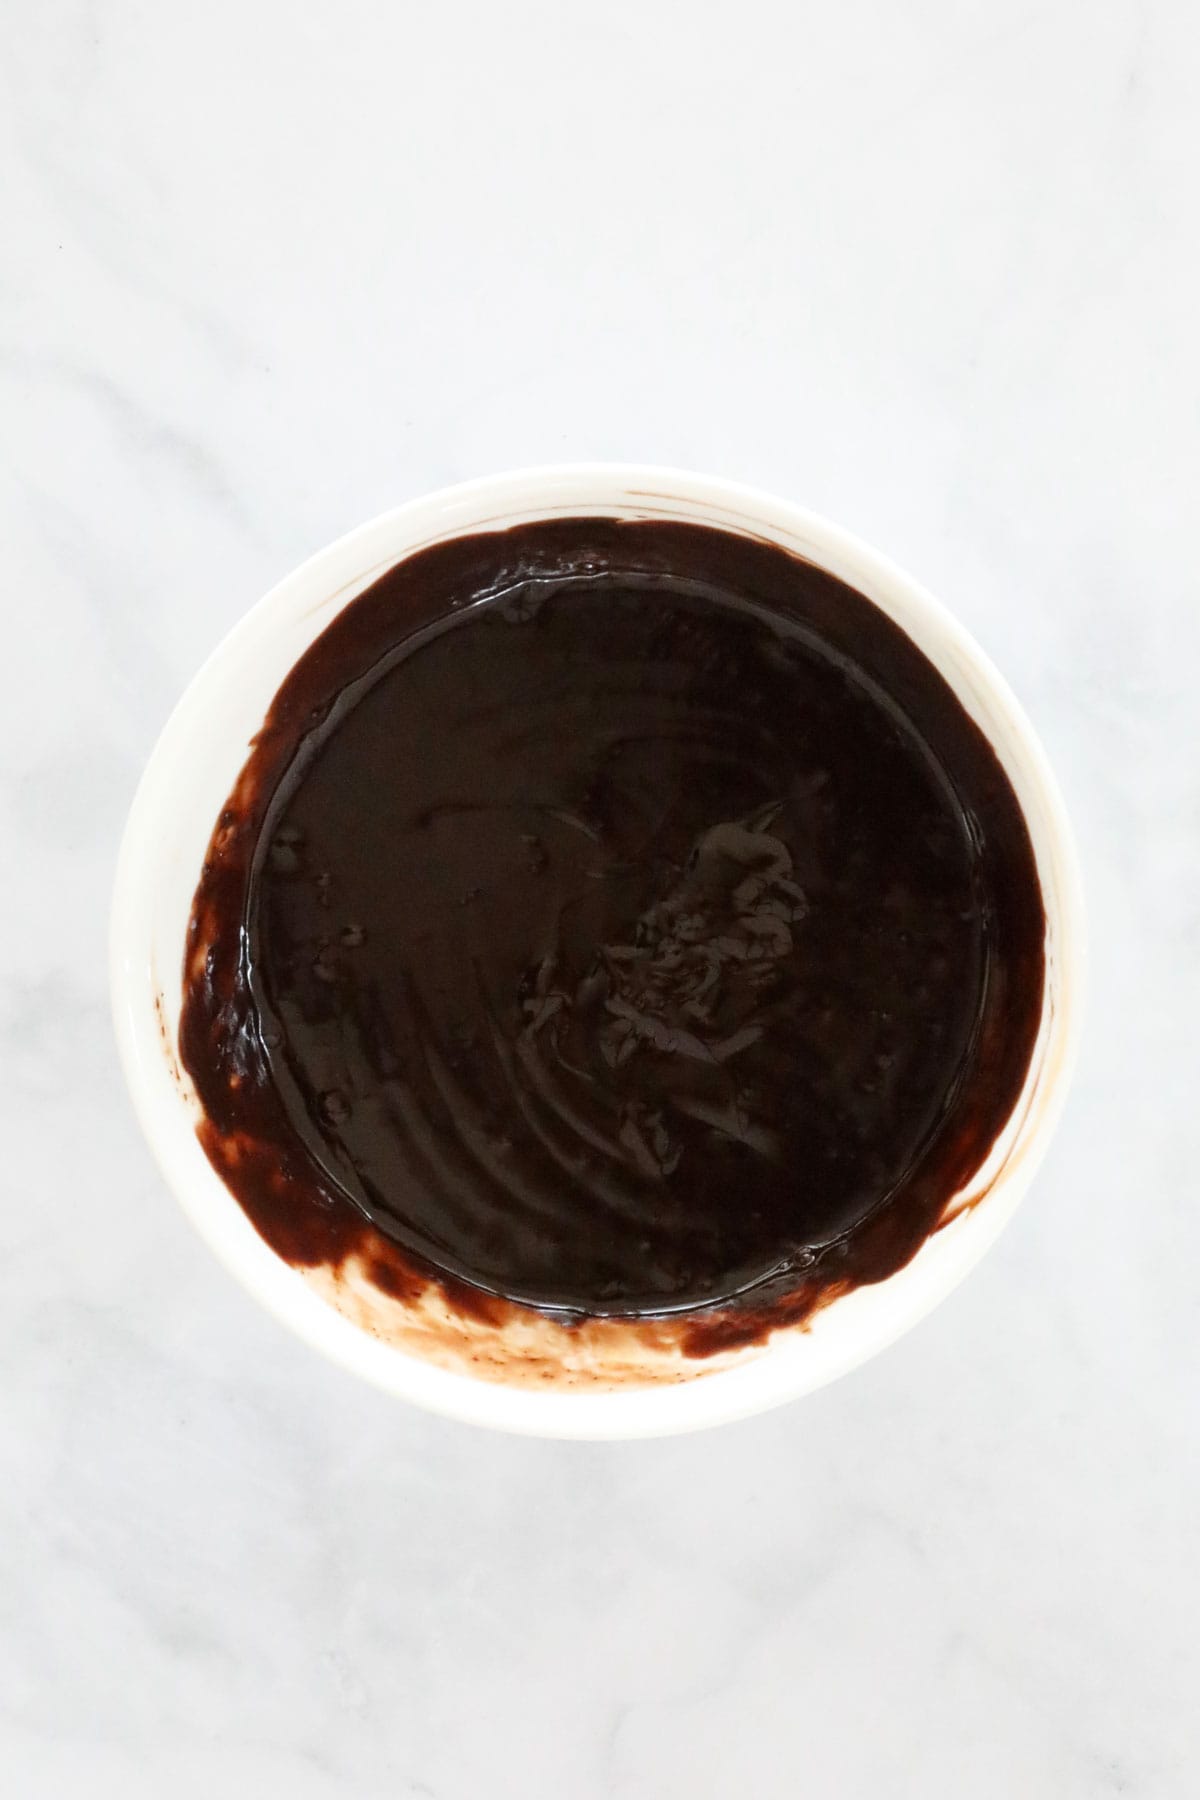 Stirred chocolate ganache in a bowl.